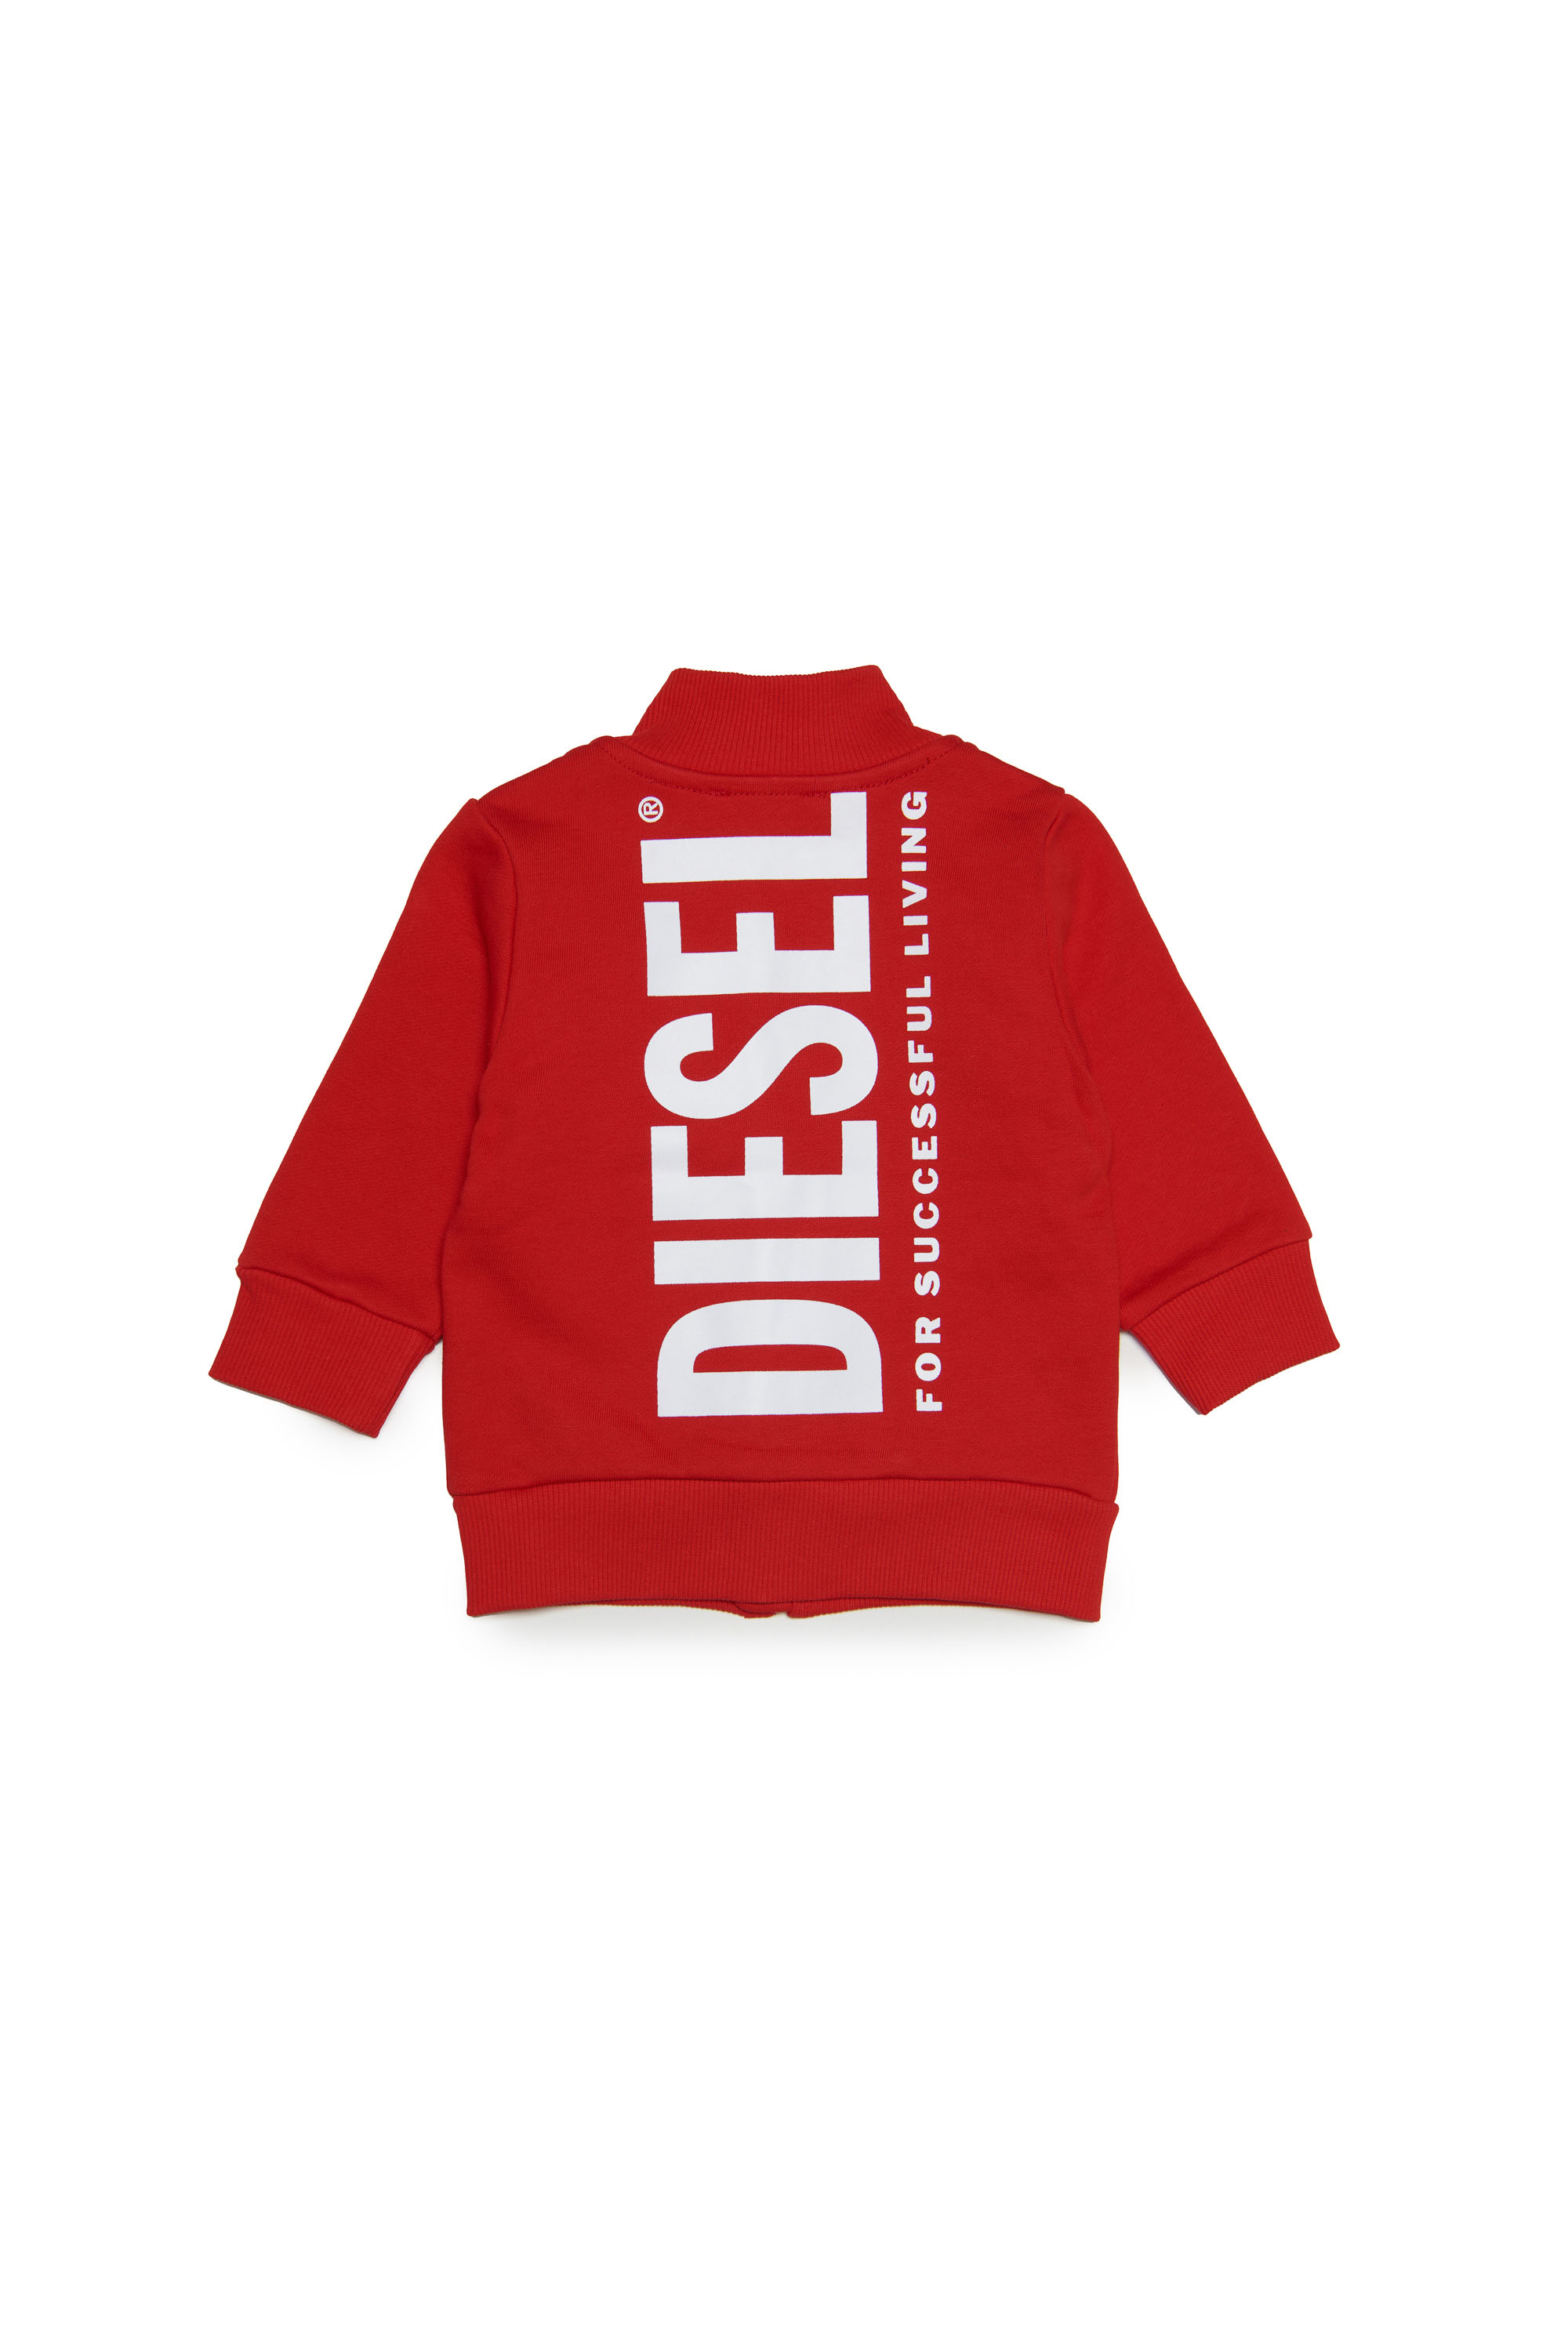 Diesel - SOLIB, Cherry Red - Image 2